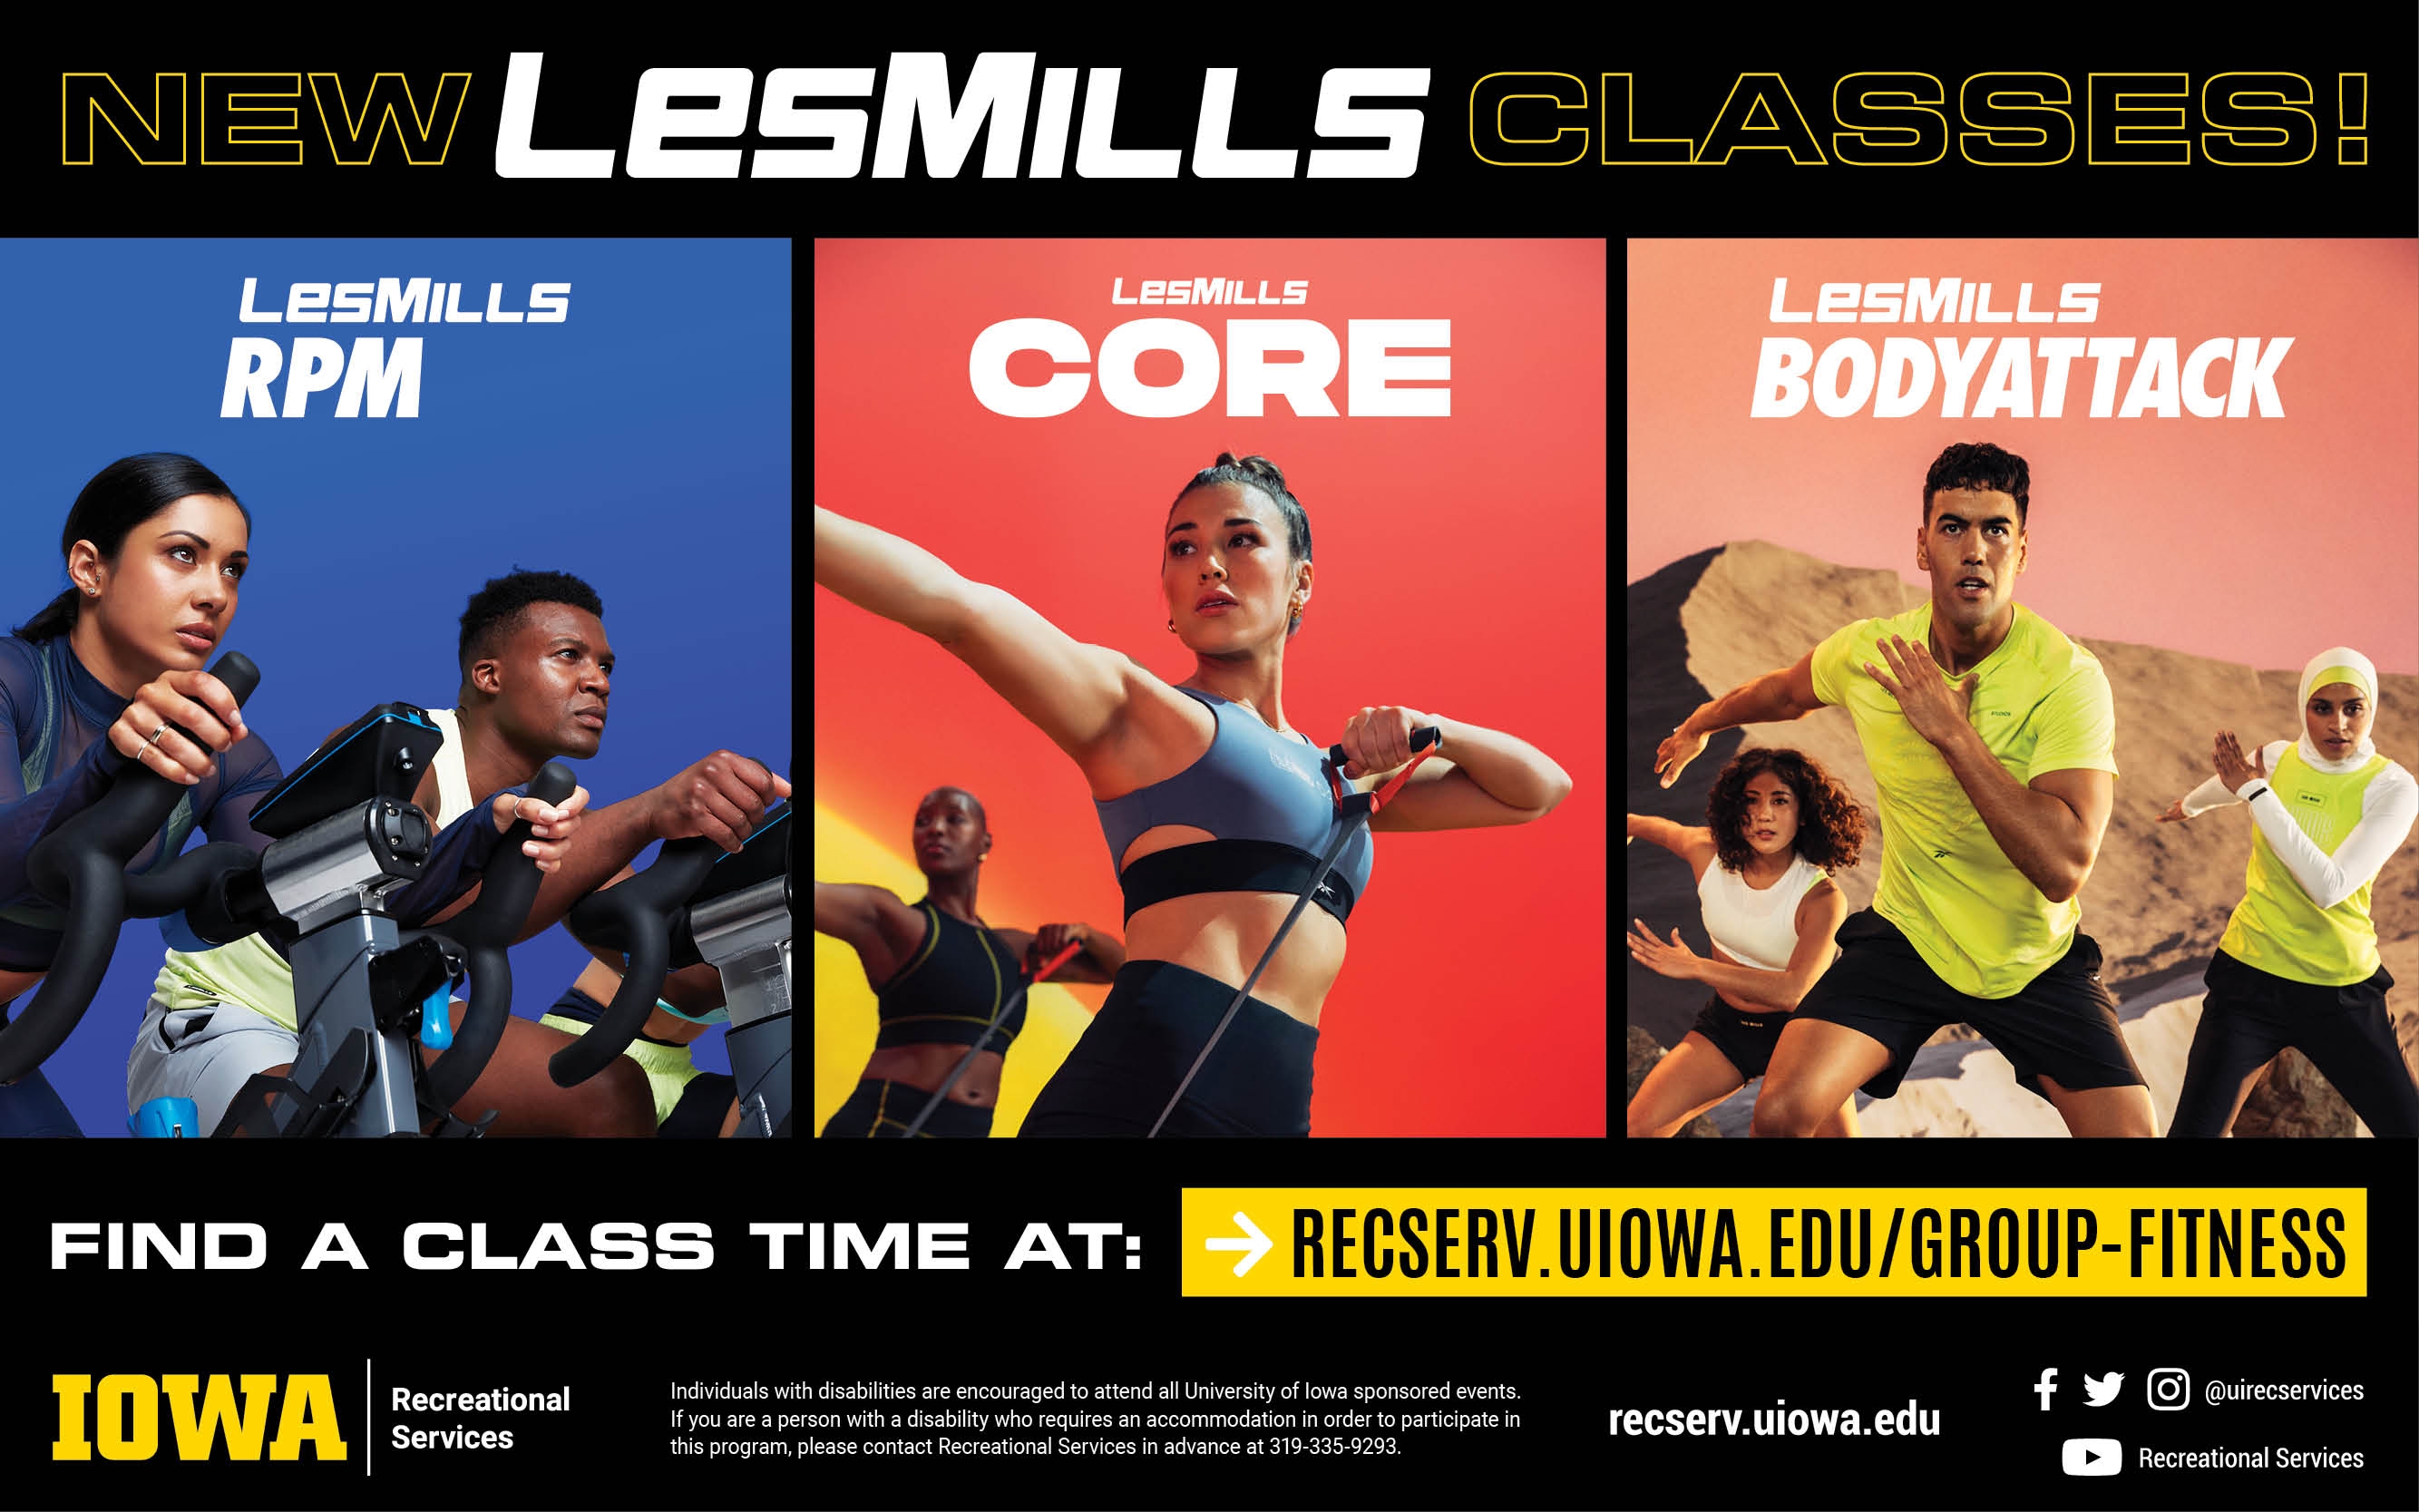 New Les Mills Classes LesMills RPM Les Mills CORE Les Mills BODYATTACK. Find a class time at: recserv.uiowa.edu/group-fitness